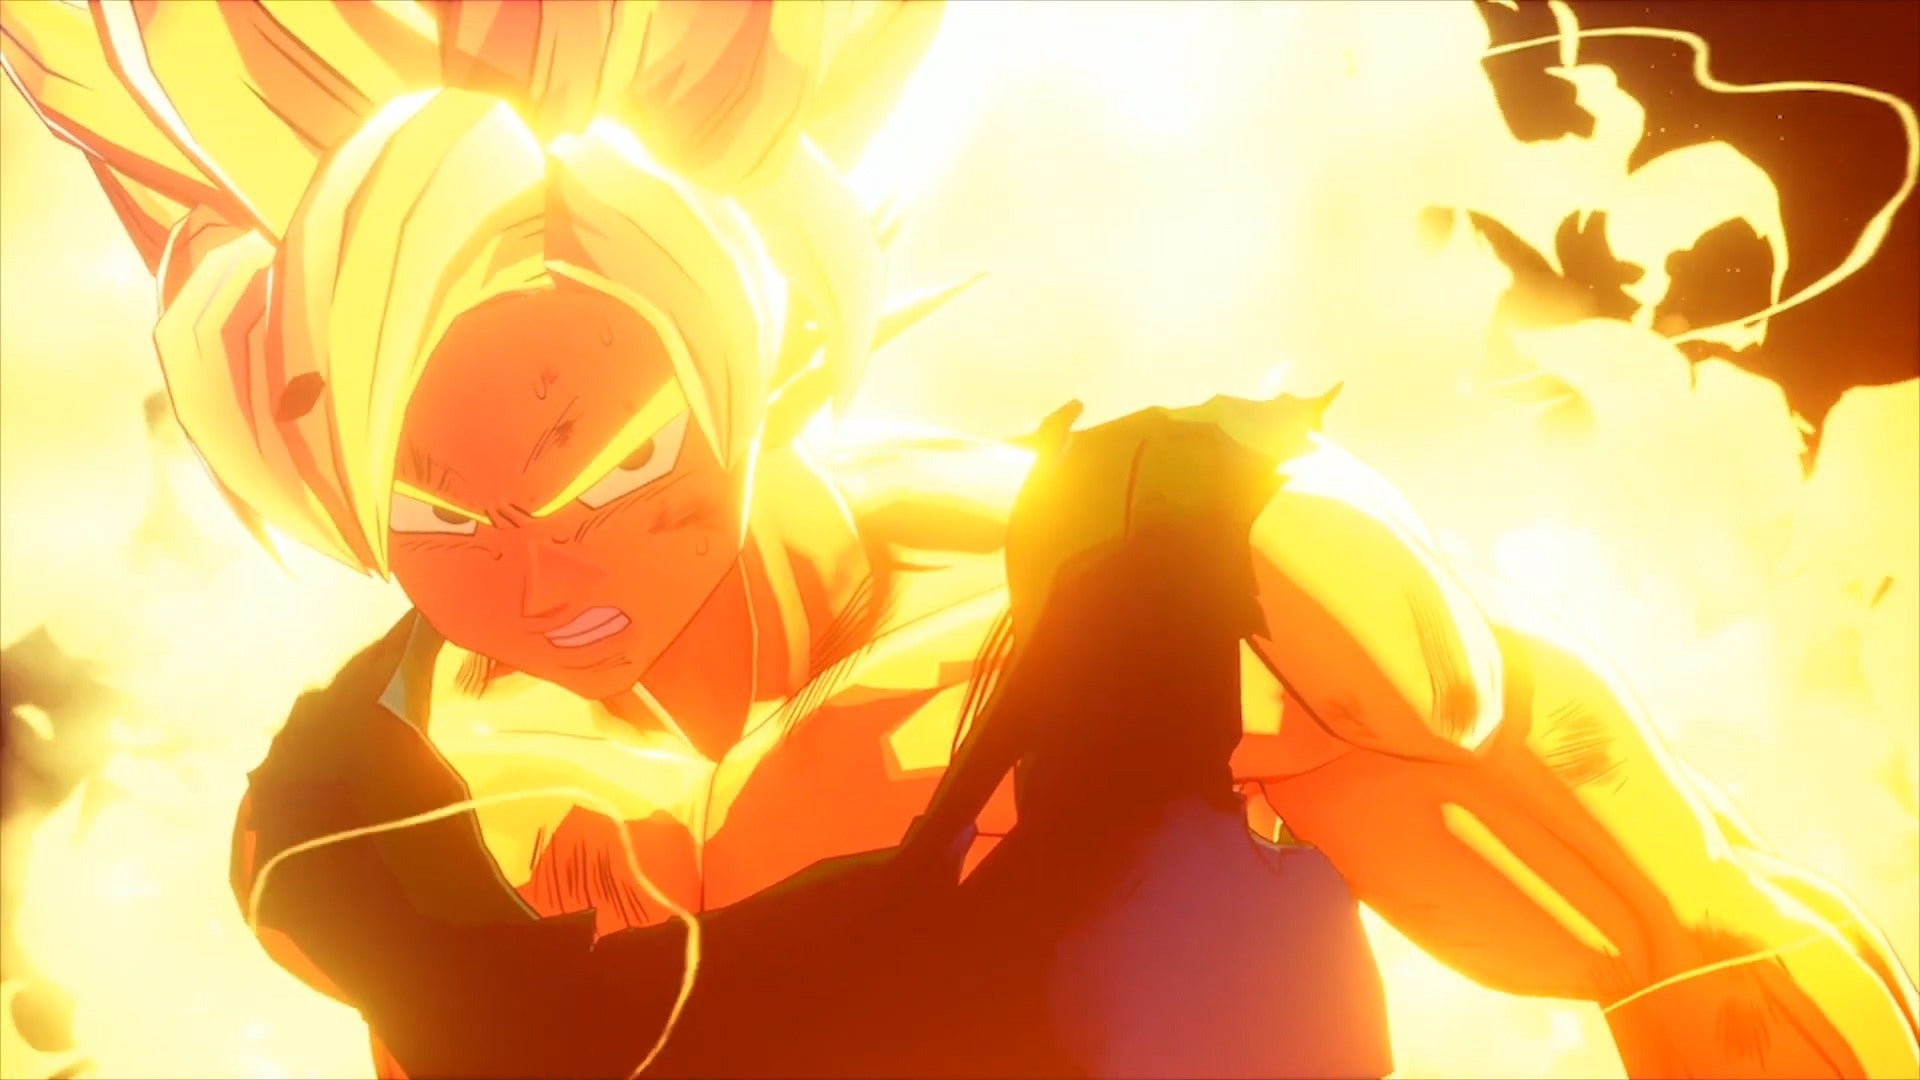 Dragon Ball Z: Kakarot – Super Saiyan God DLC Coming This Spring